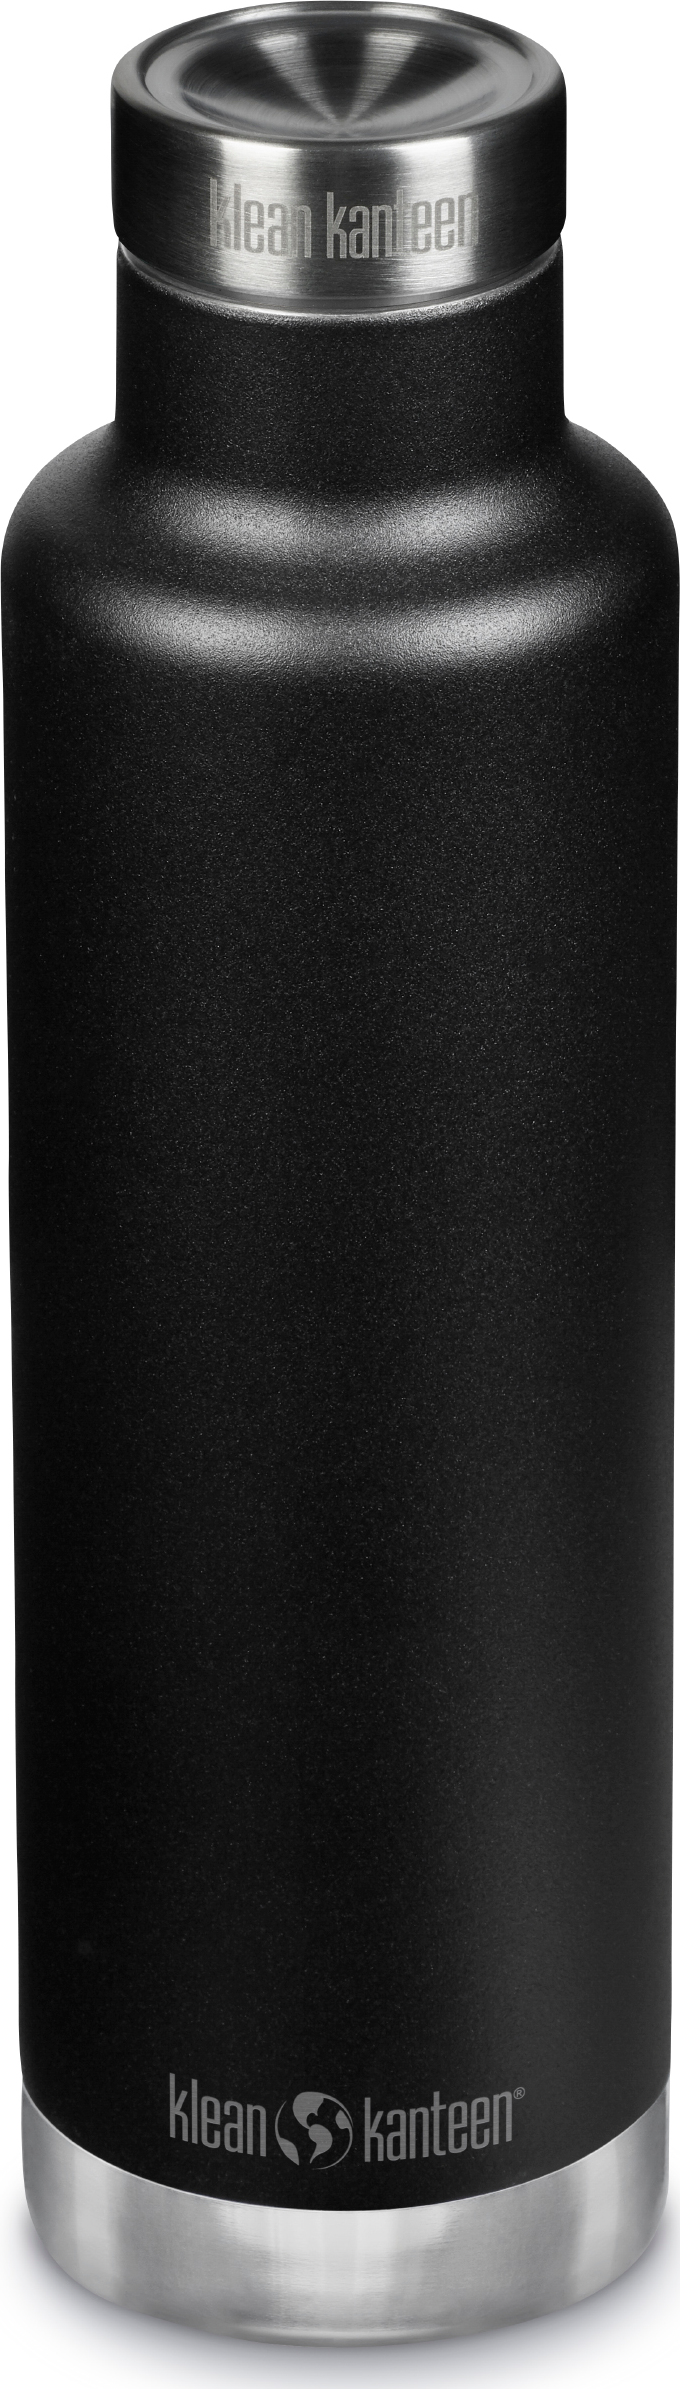 Klean Kanteen Klean Kanteen Insulated Classic Pour Through 750 ml Black 750 ml, Black